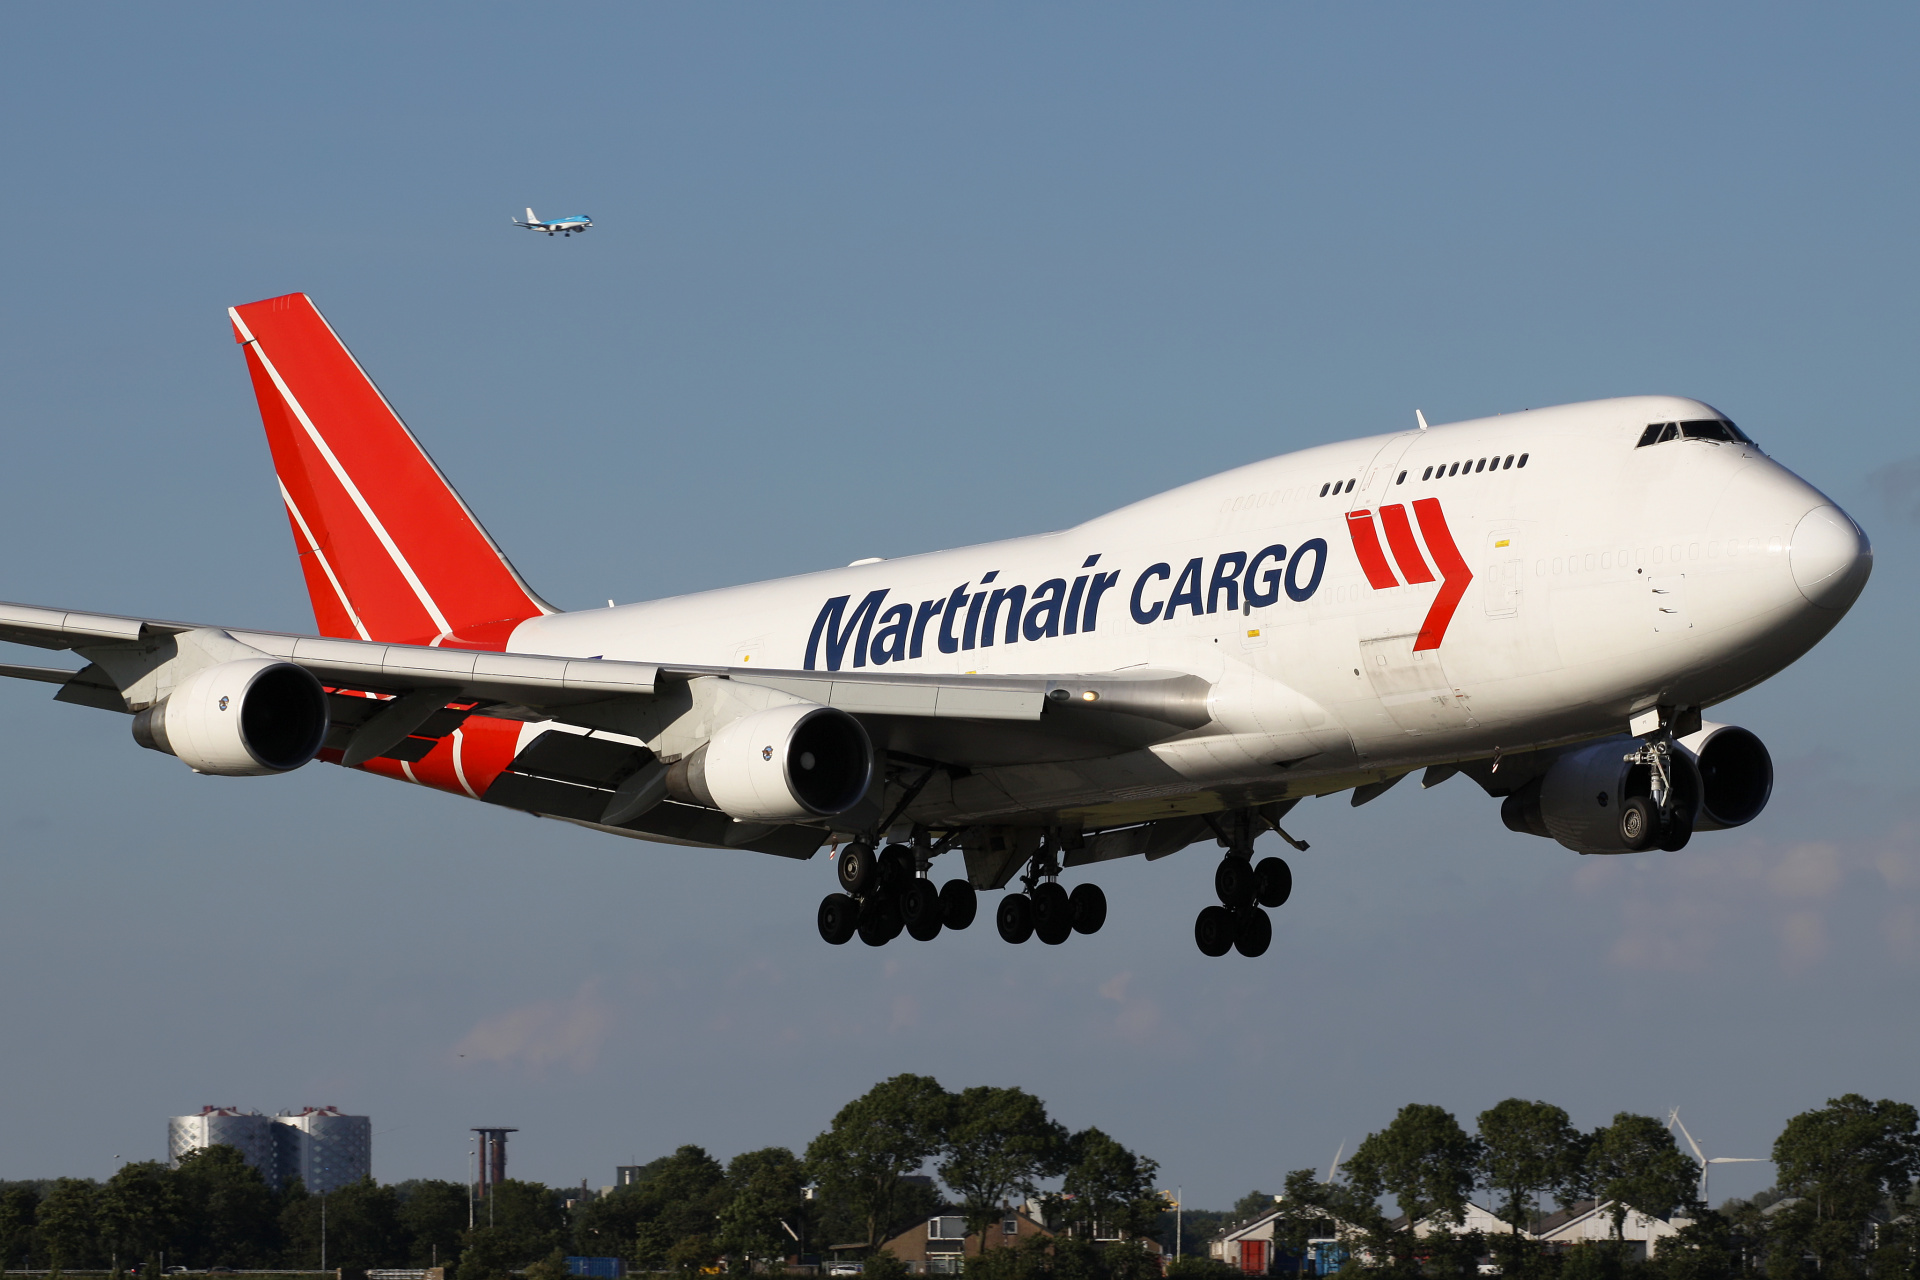 BCF, PH-MPS, Martinair Cargo (Aircraft » Schiphol Spotting » Boeing 747-400F)